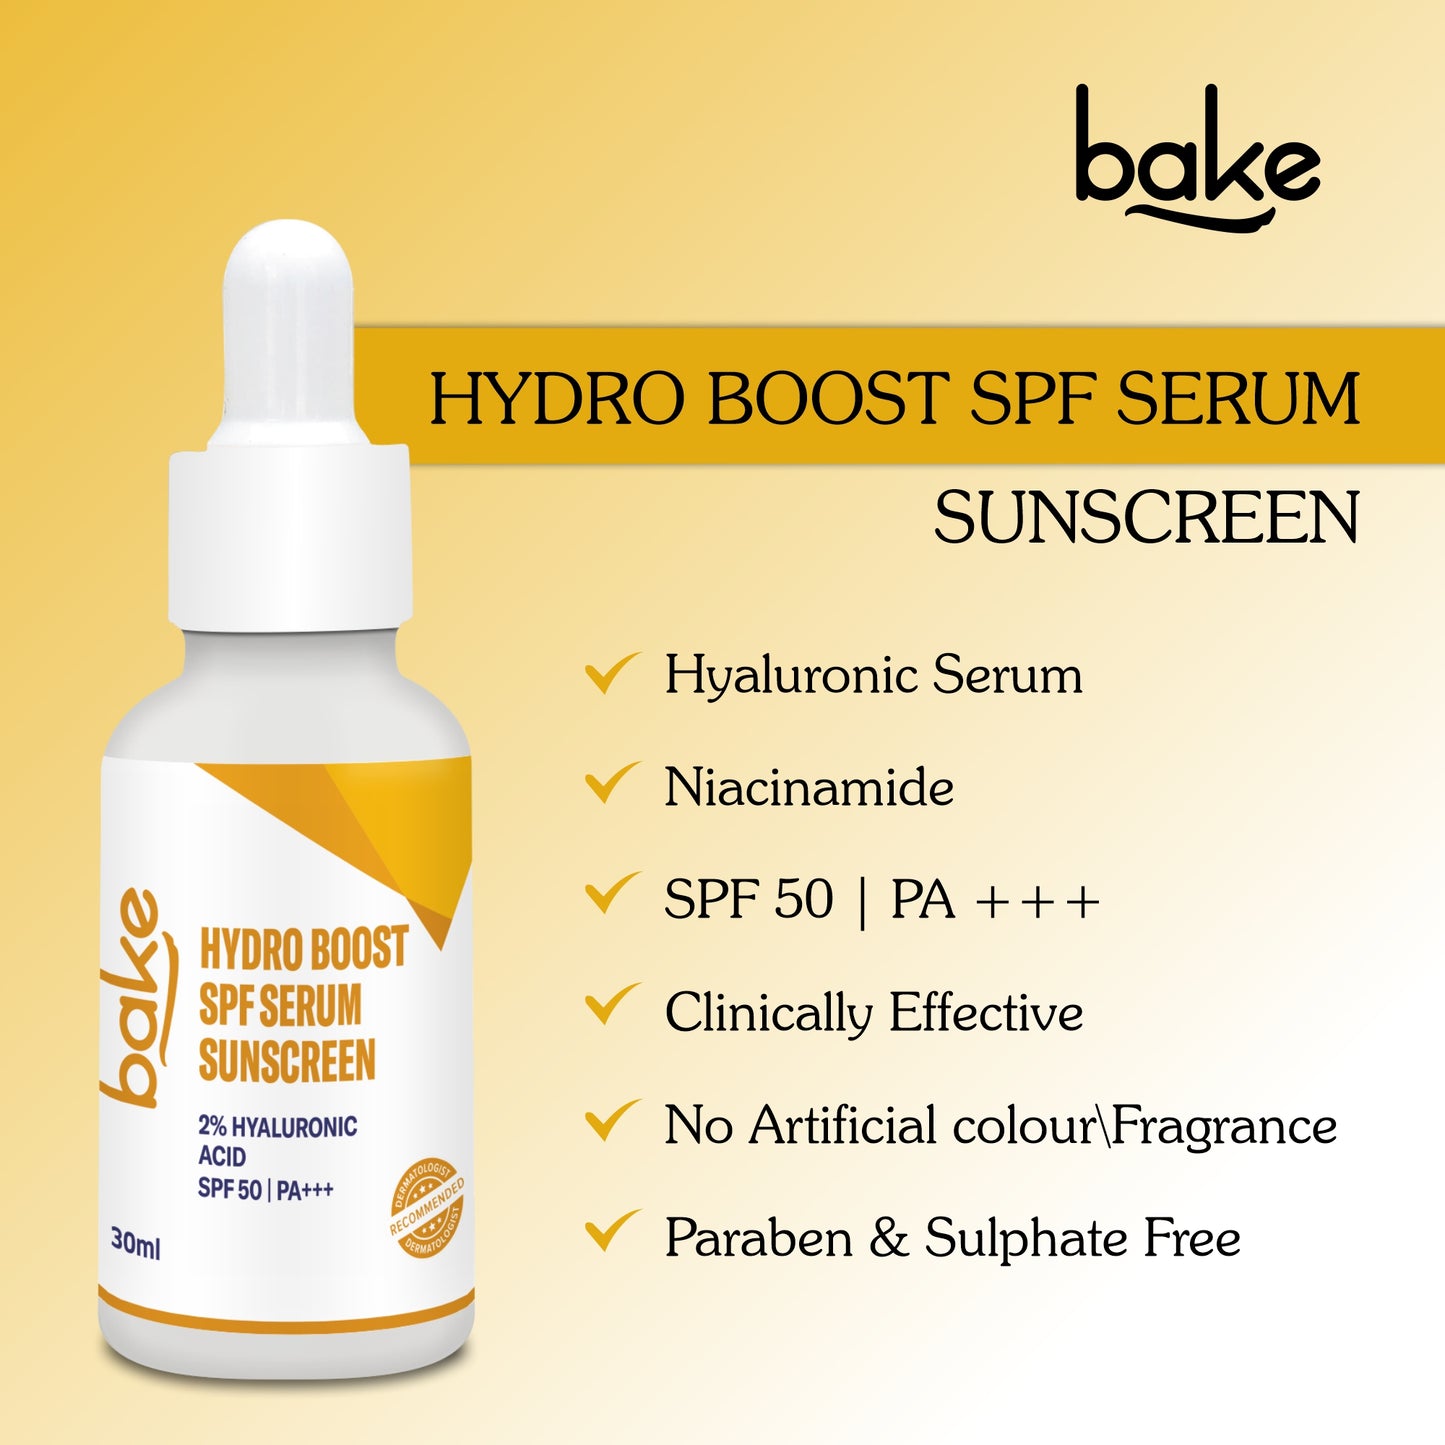 Hydro Boost SPF Serum Sunscreen